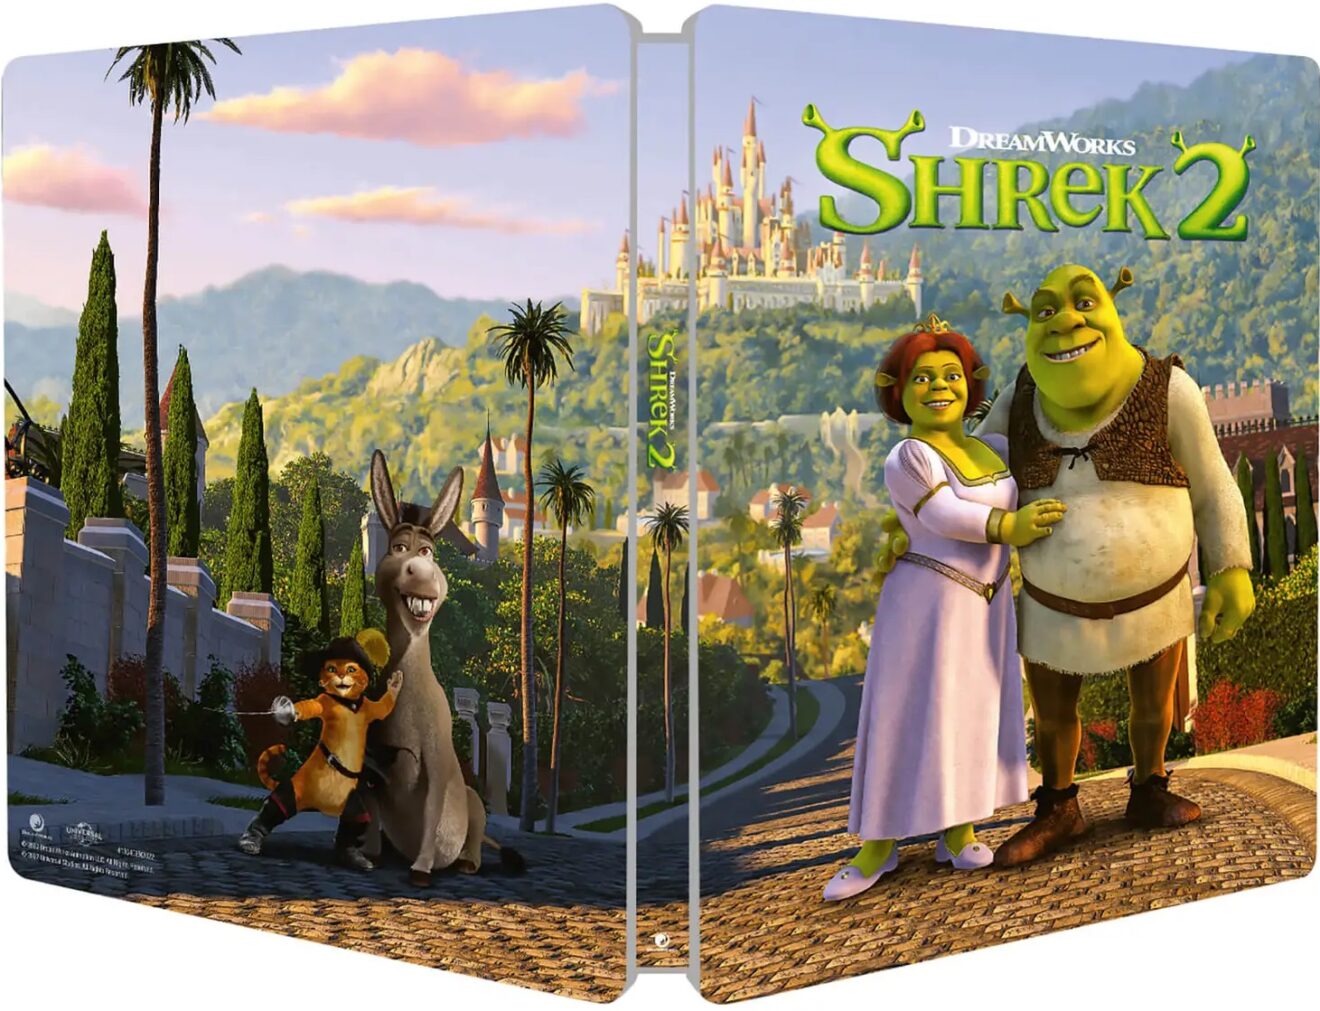 Animated Comedy Sequel Shrek 2 Is Getting A New Uk 4k Steelbook Release In December